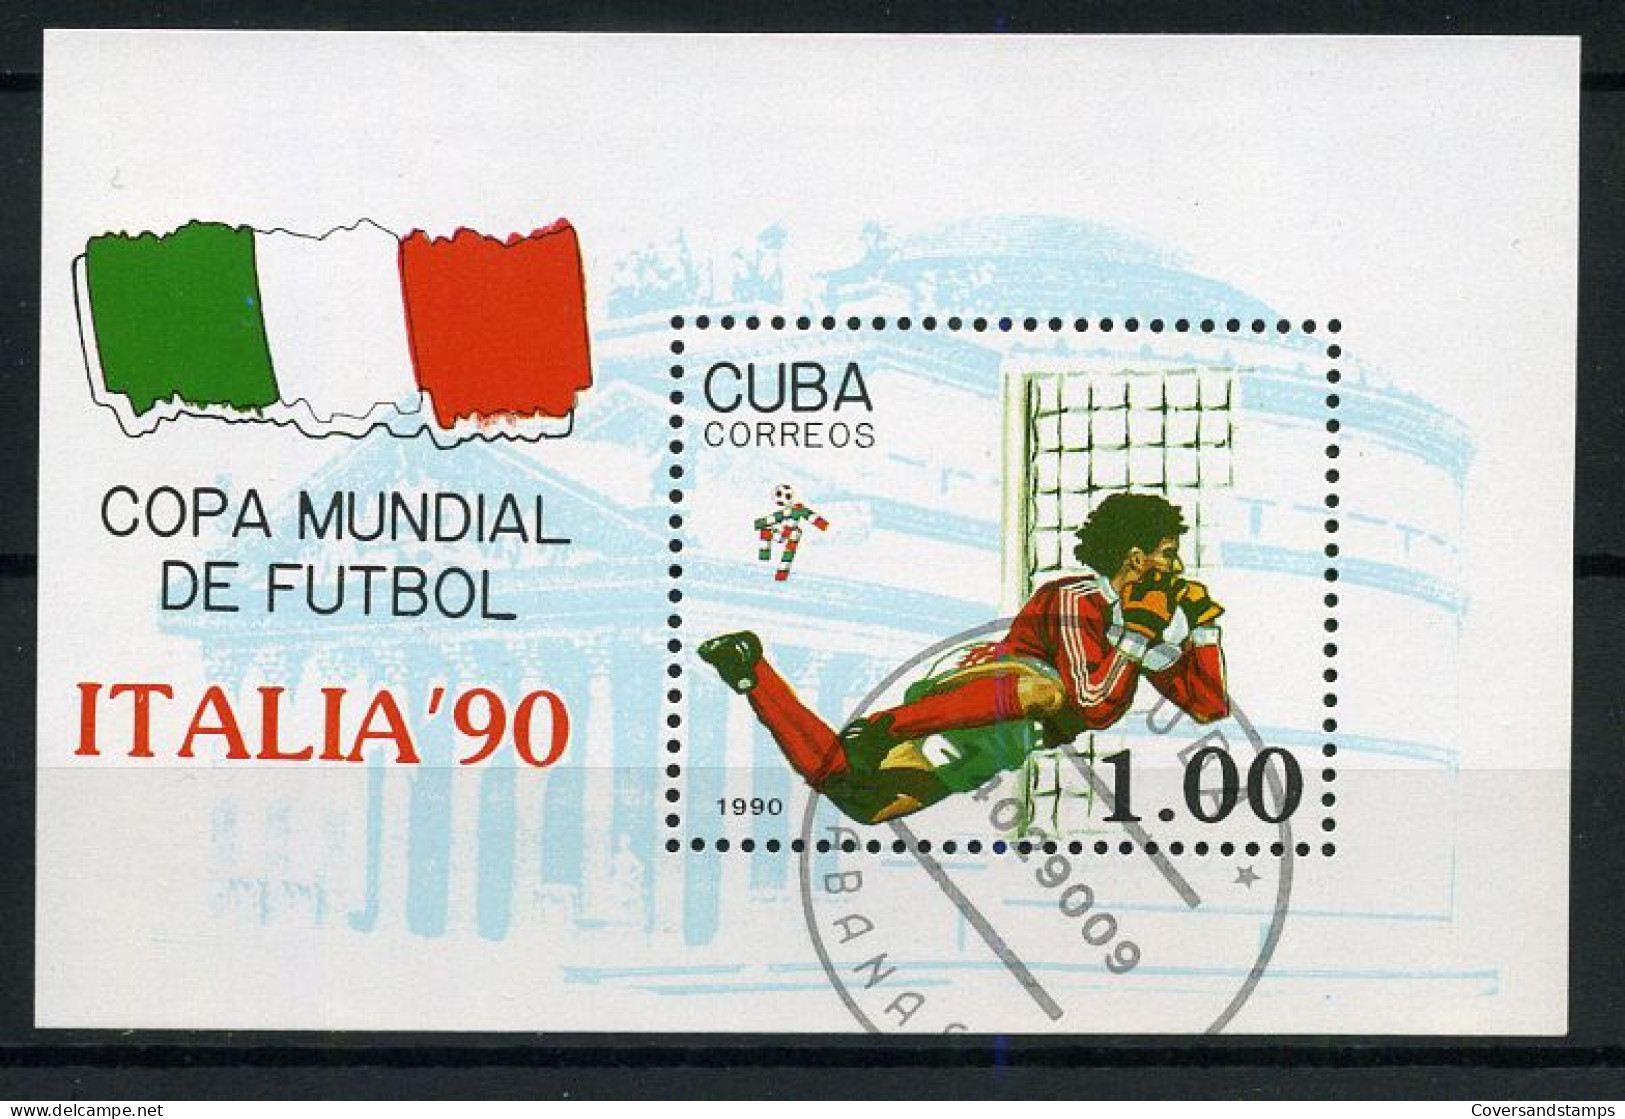 Cuba - Copa Mundial De Futbol, Italia '90 - 1990 – Italien